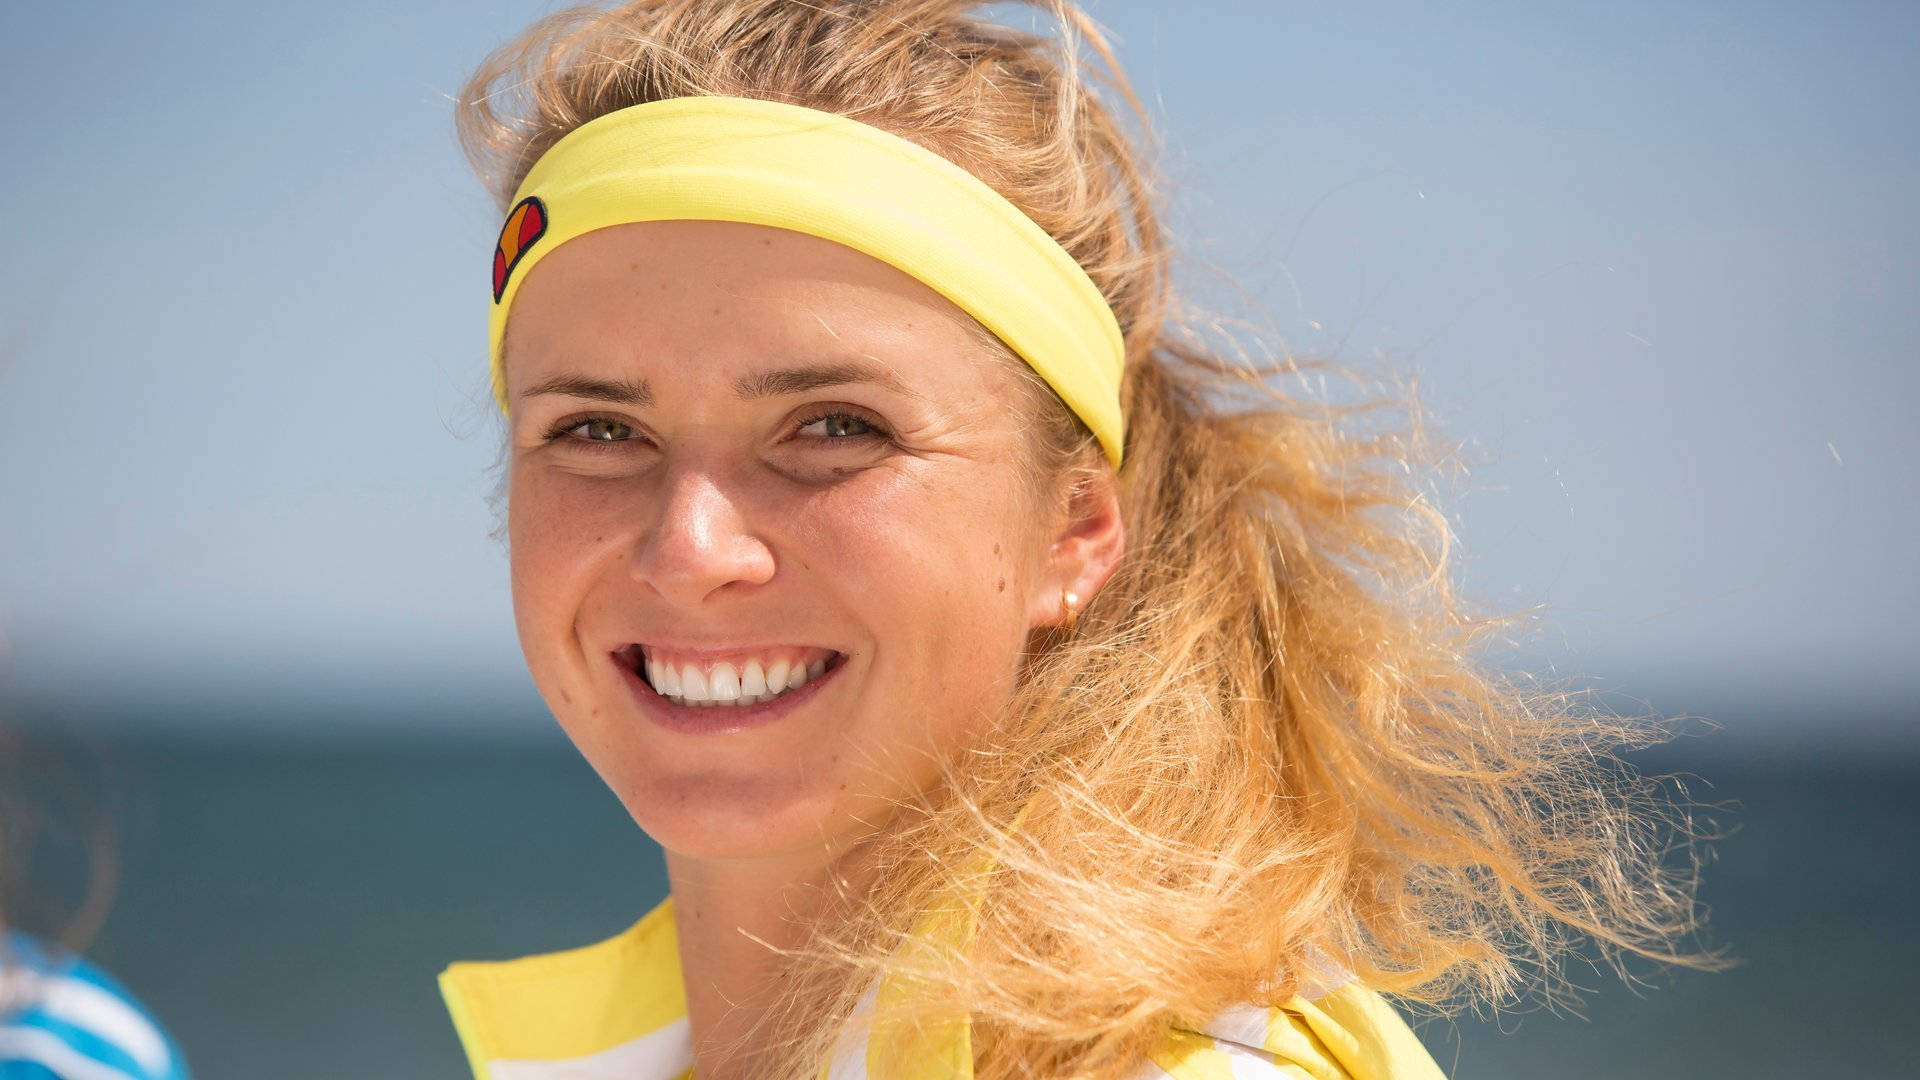 Elina Svitolina Wearing Yellow Headband Wallpaper